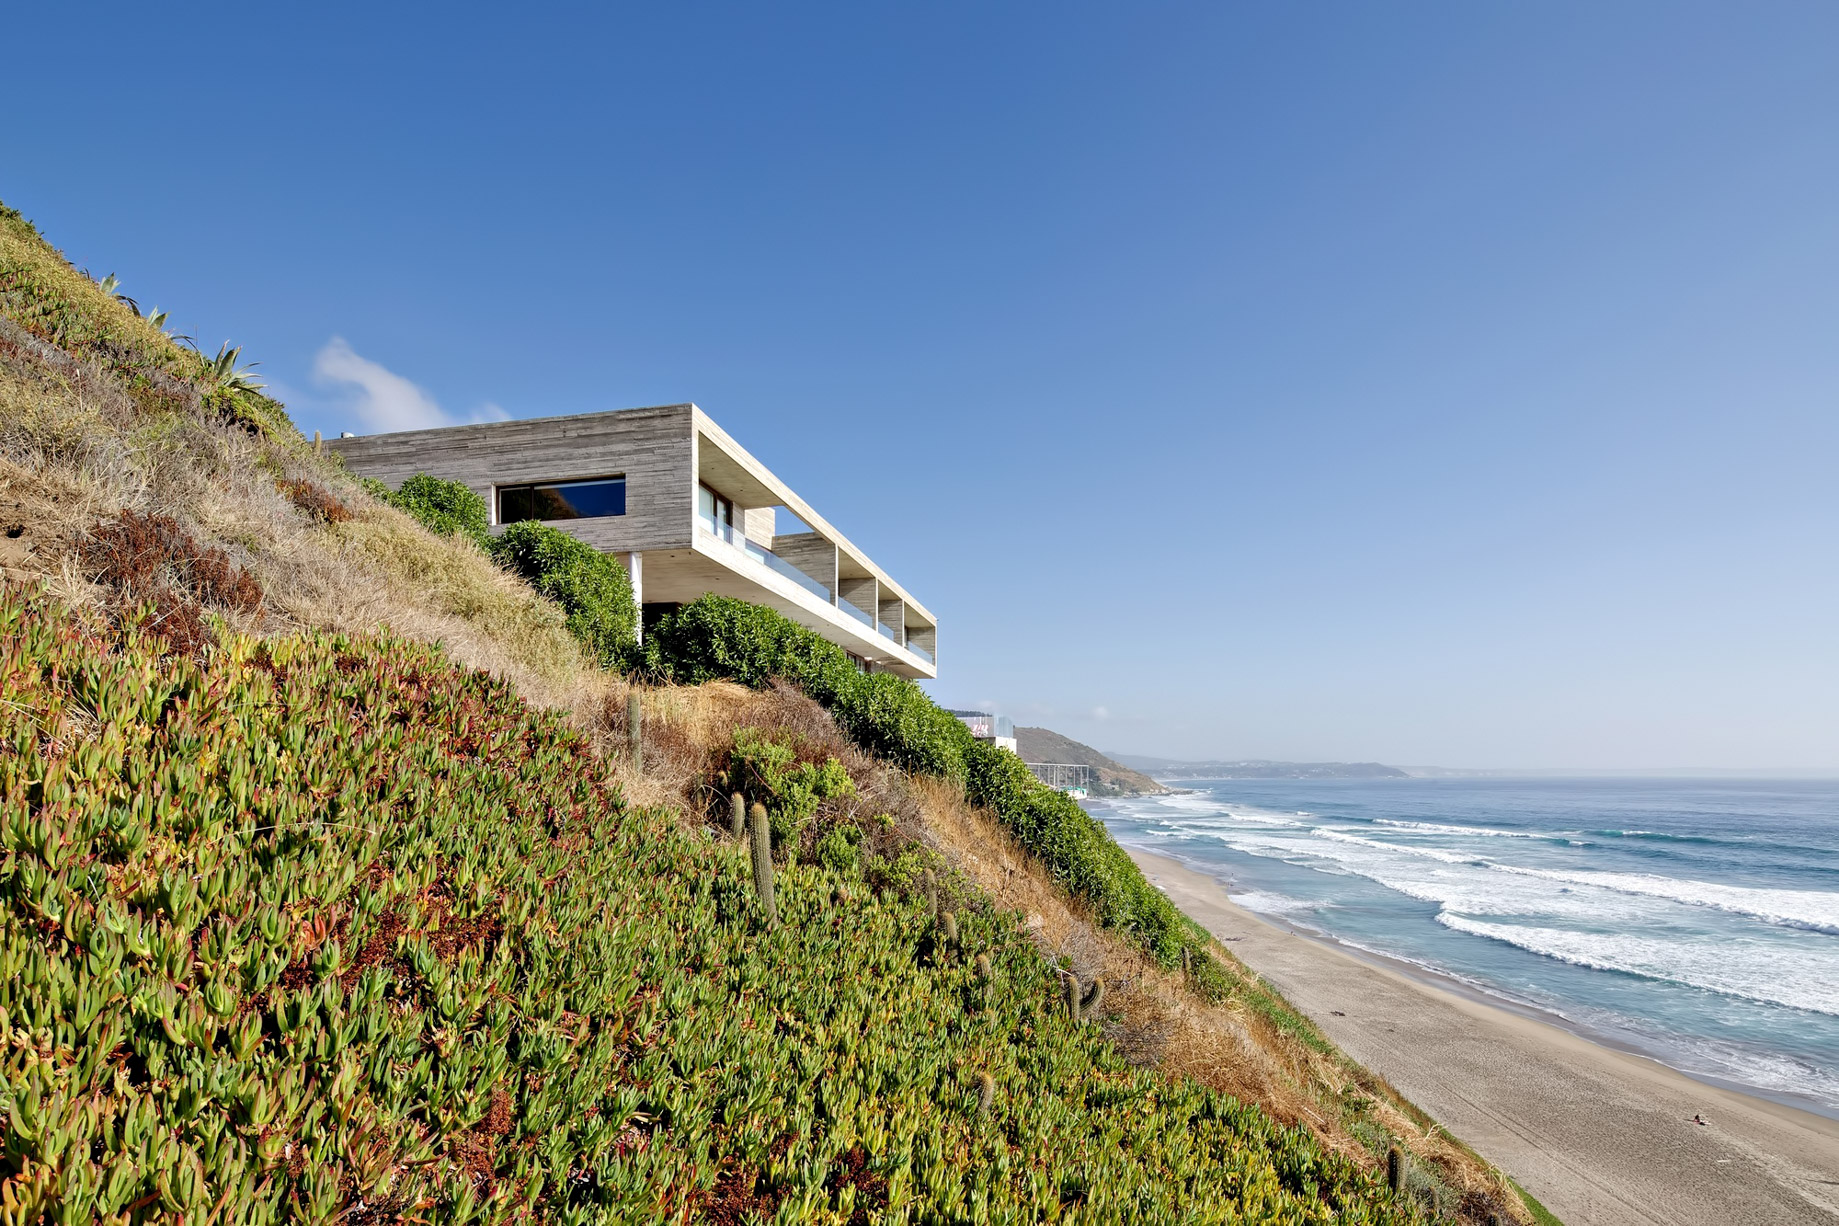 Paravicini Luxury Beach House – Cachagua, Chile